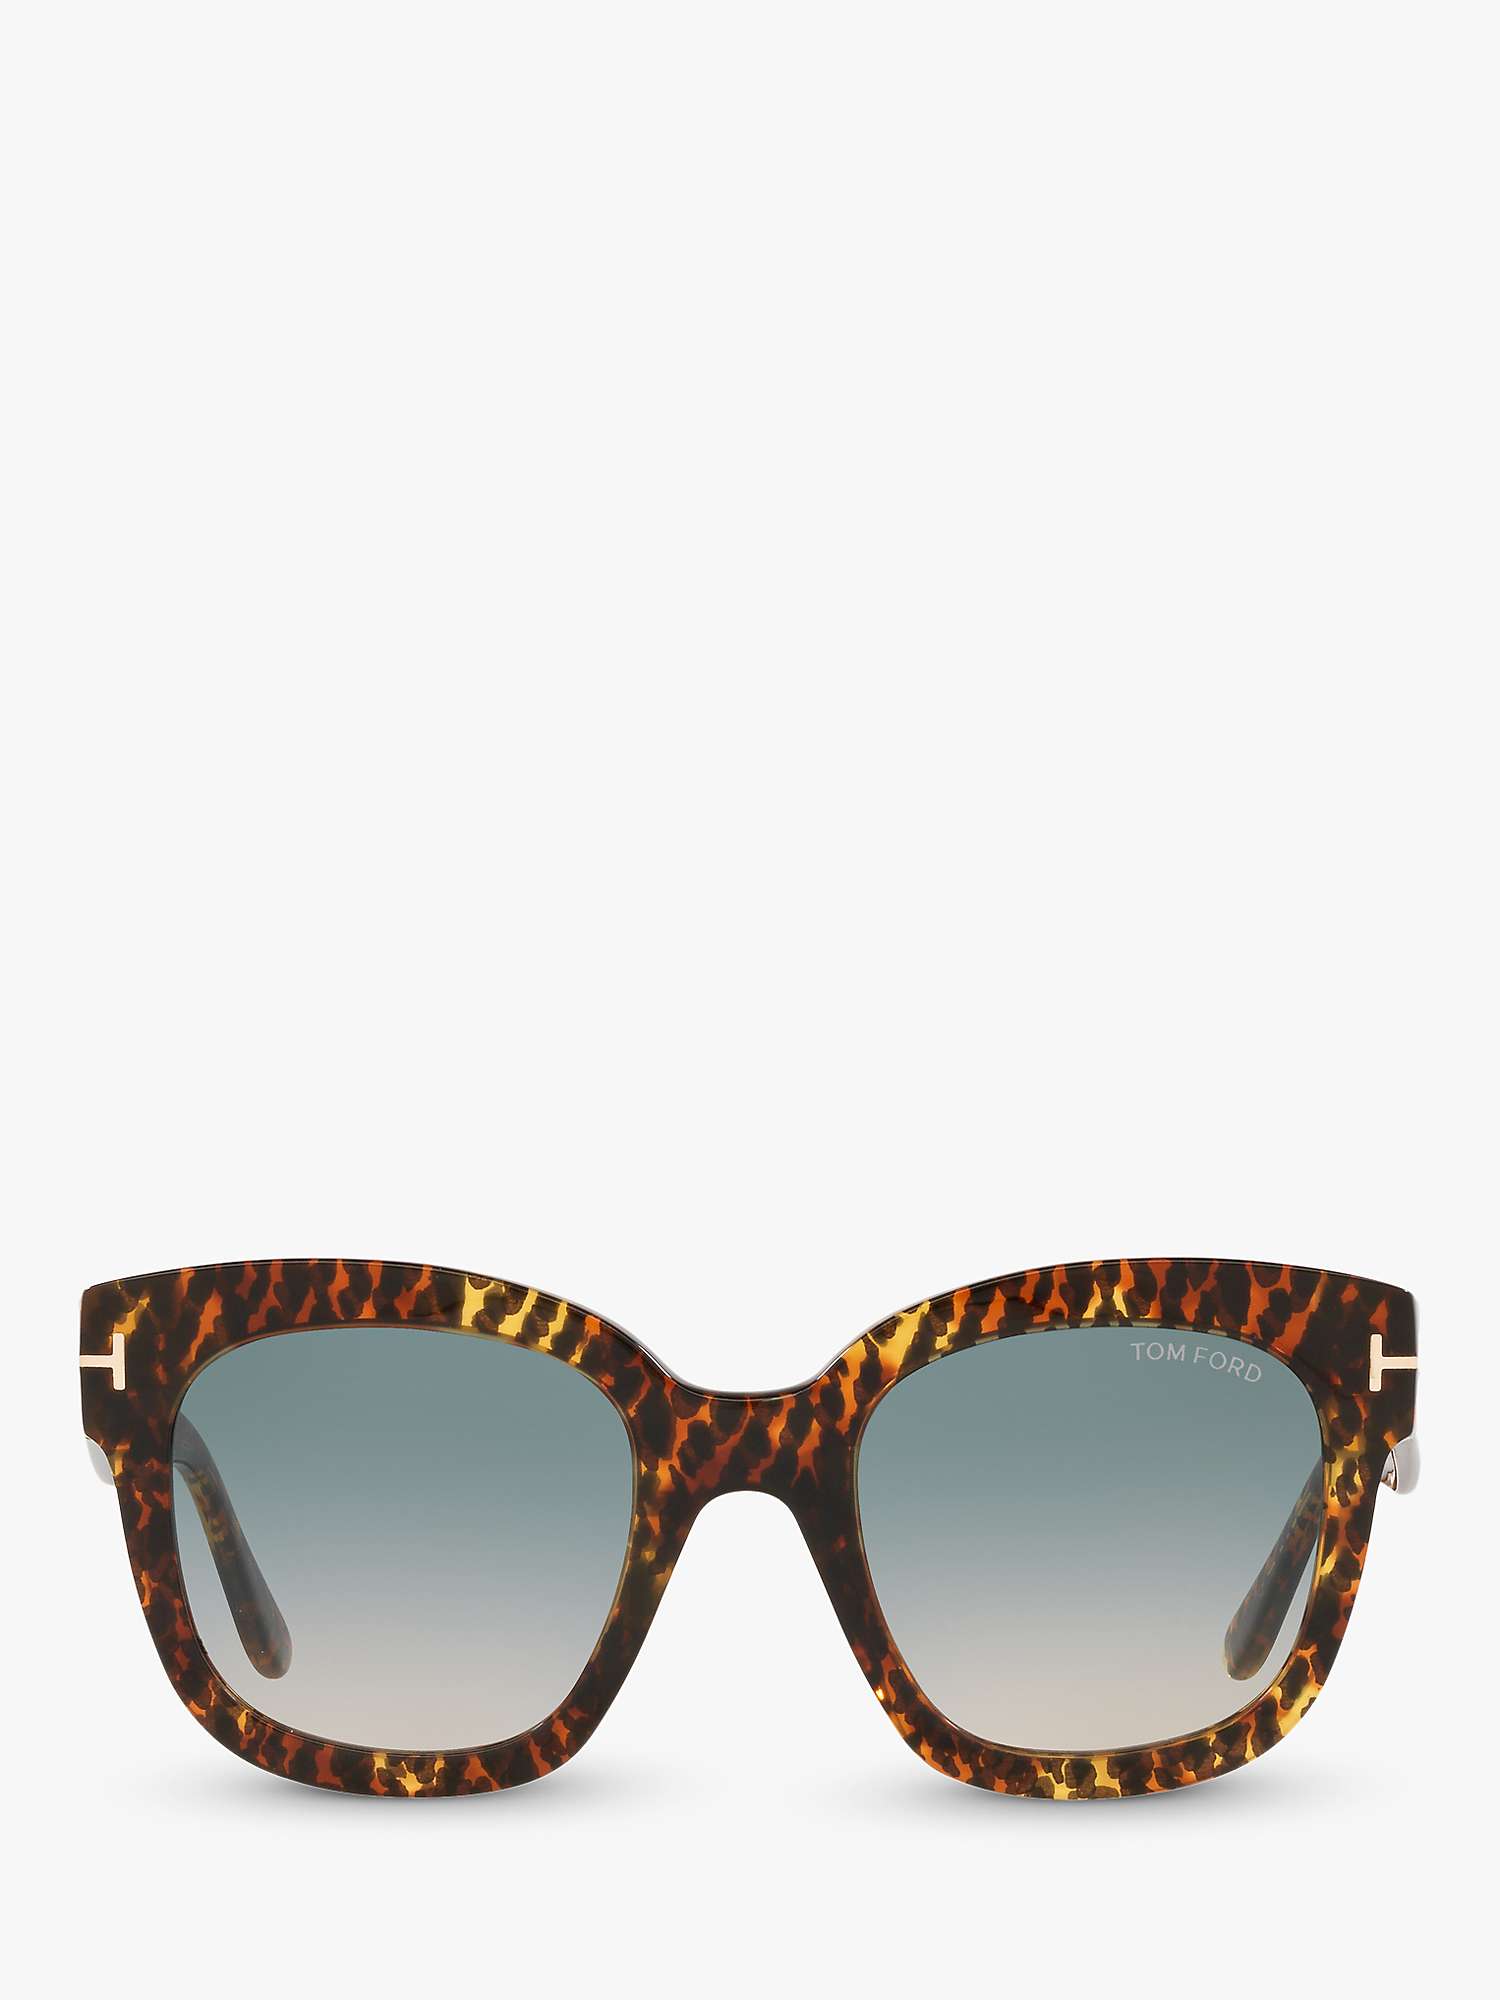 Buy TOM FORD 0TR001298 Women's Square Sunglasses, Tortoise Online at johnlewis.com